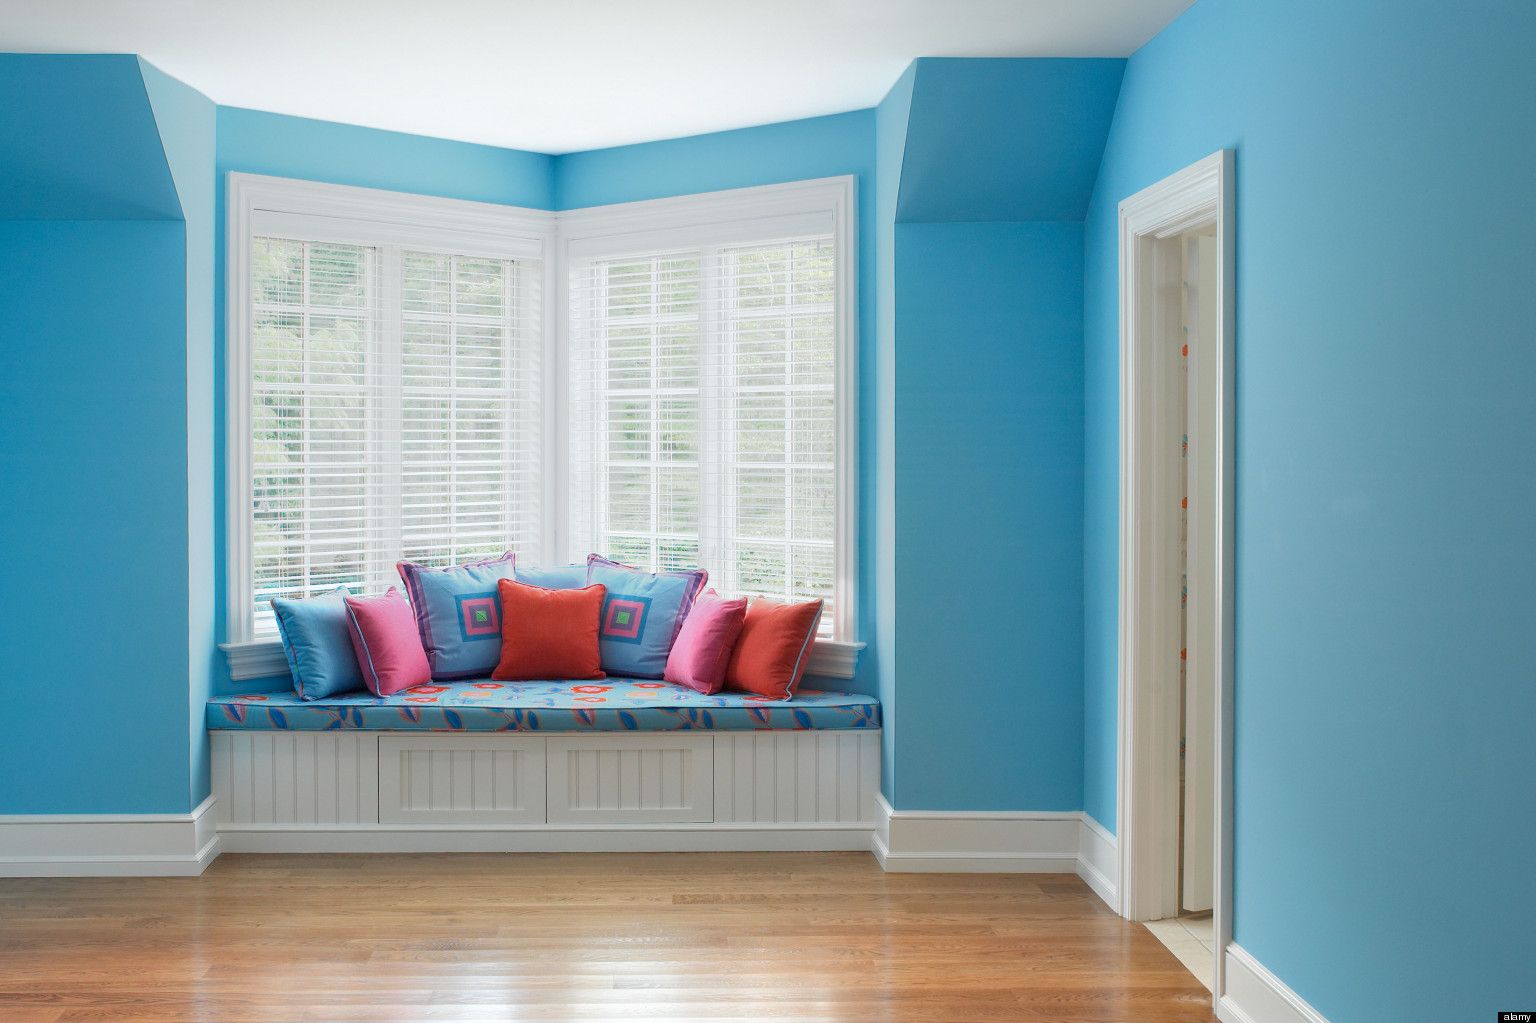 bedroom-in-bright-cornflower-blue-bedrooms-rooms-color-impressive-bright-blue-bedroom-l-f87f4d15263ef541-e865c1c1bfc443bb2577cd7903e9c562.jpg